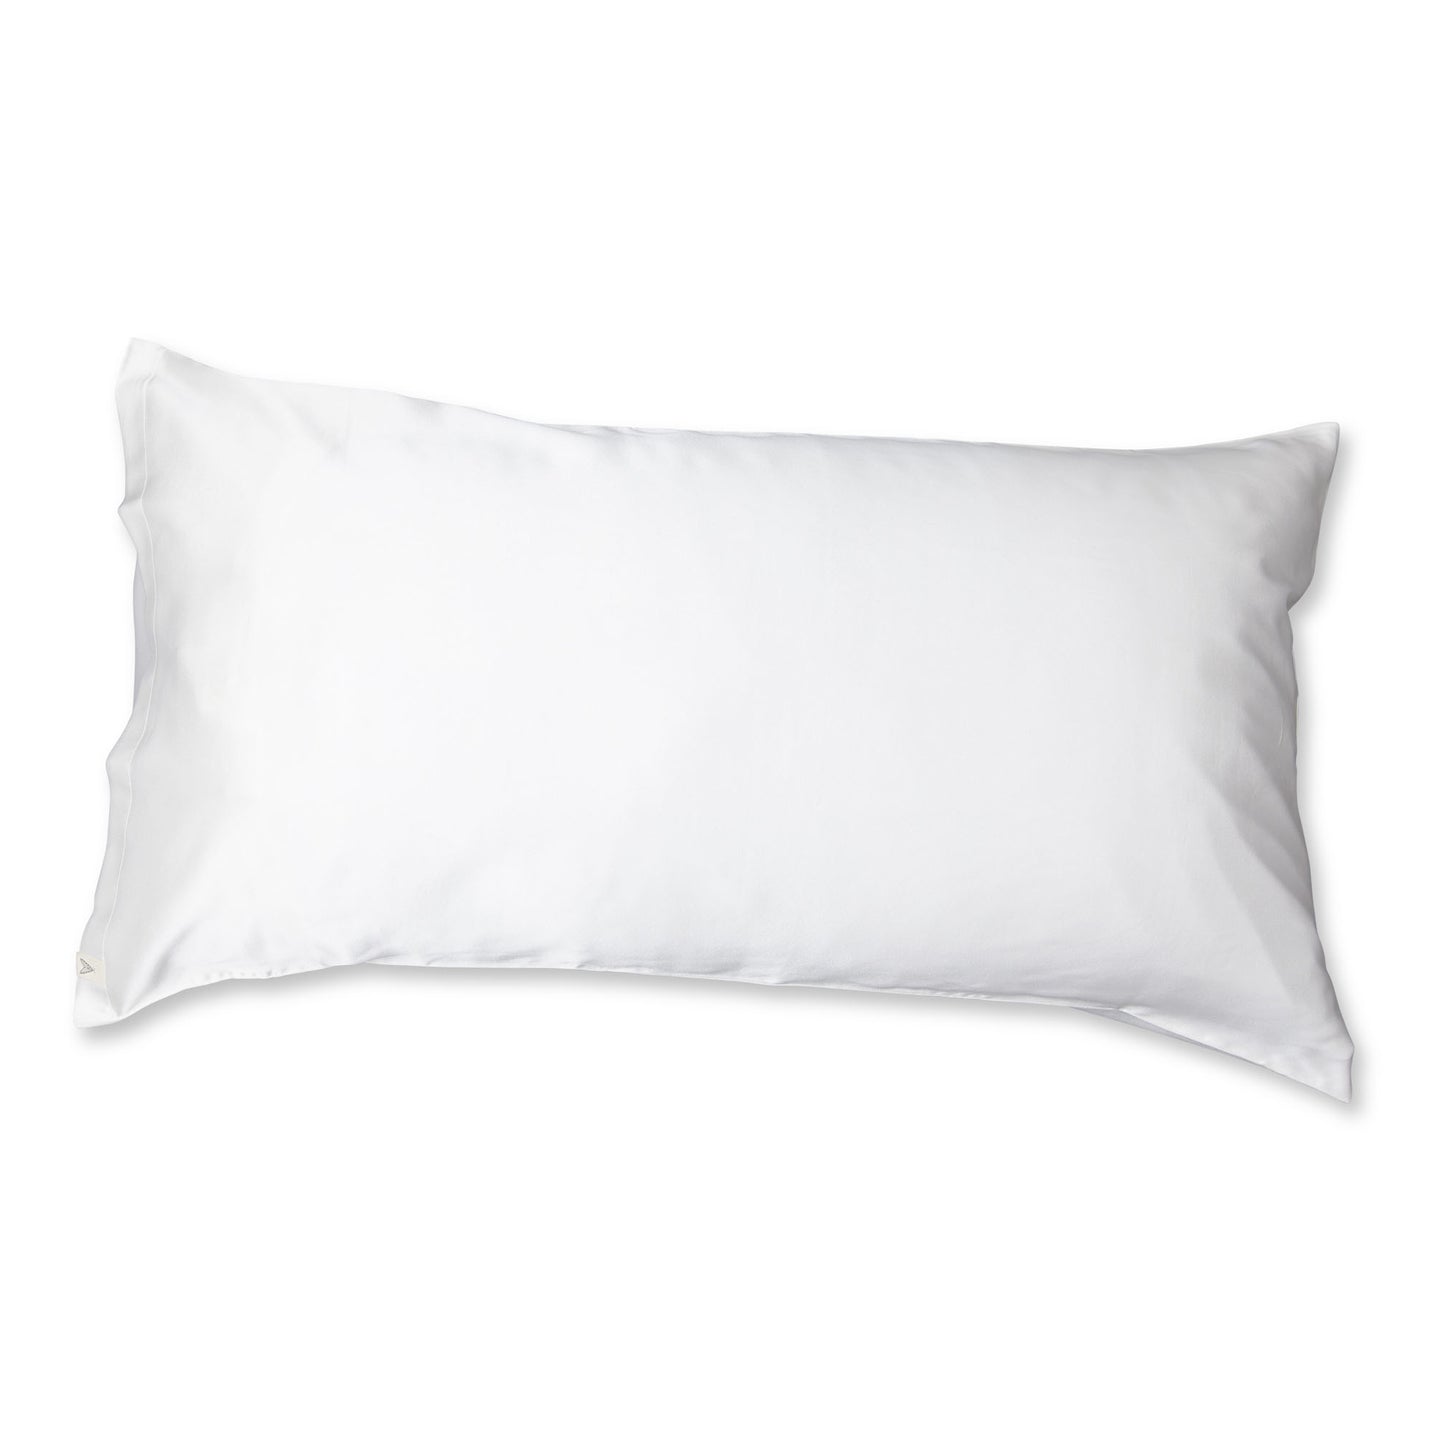 White ethical peace silk pillowcase, king size